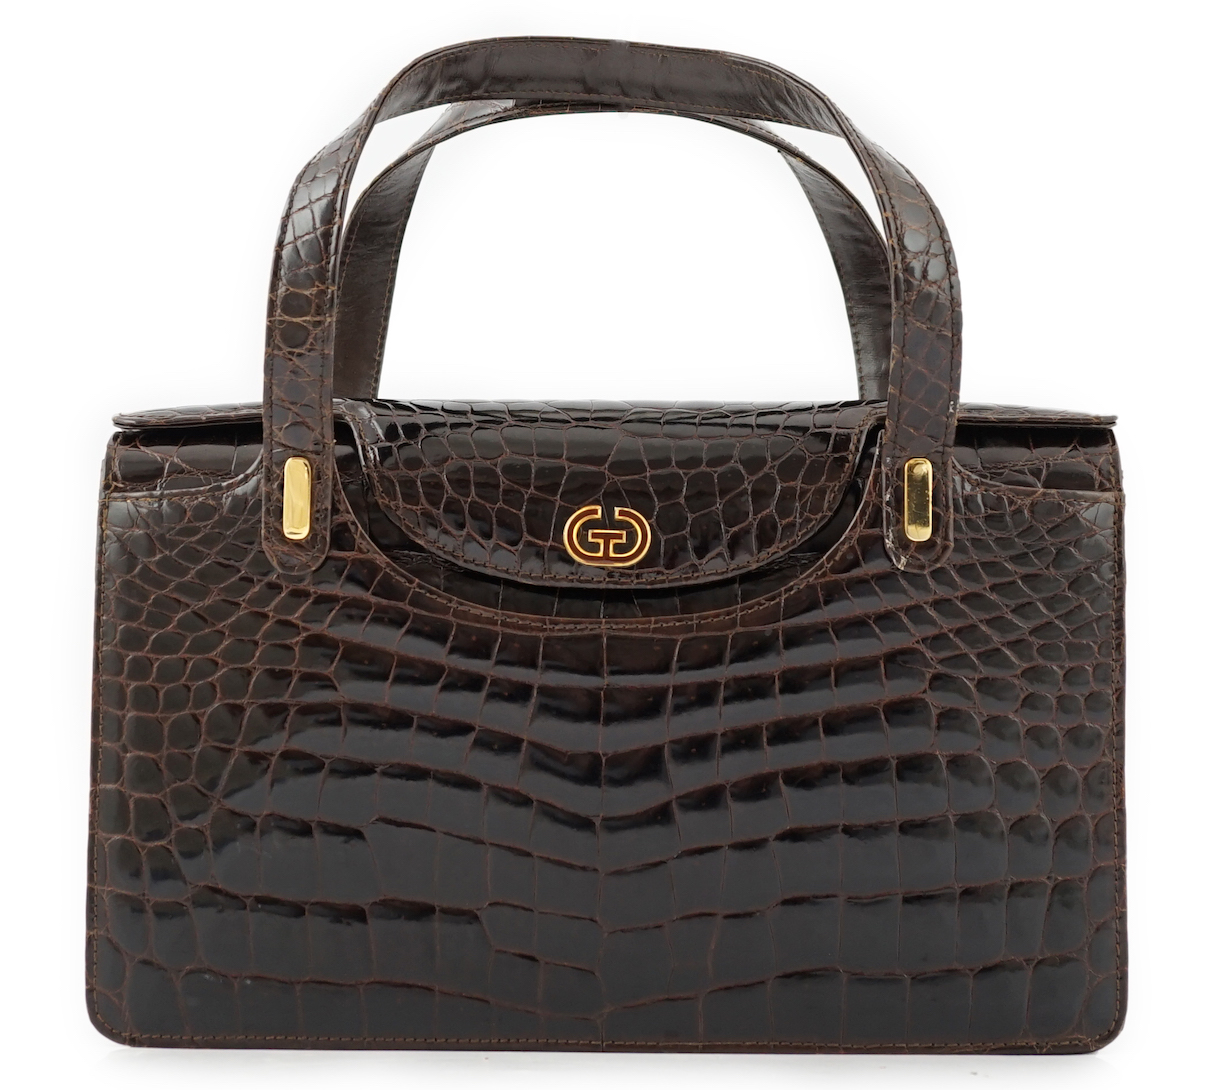 A lady's vintage brown crocodile handbag height 20cm, height to handles 33cm, width 32cm, depth 6cm